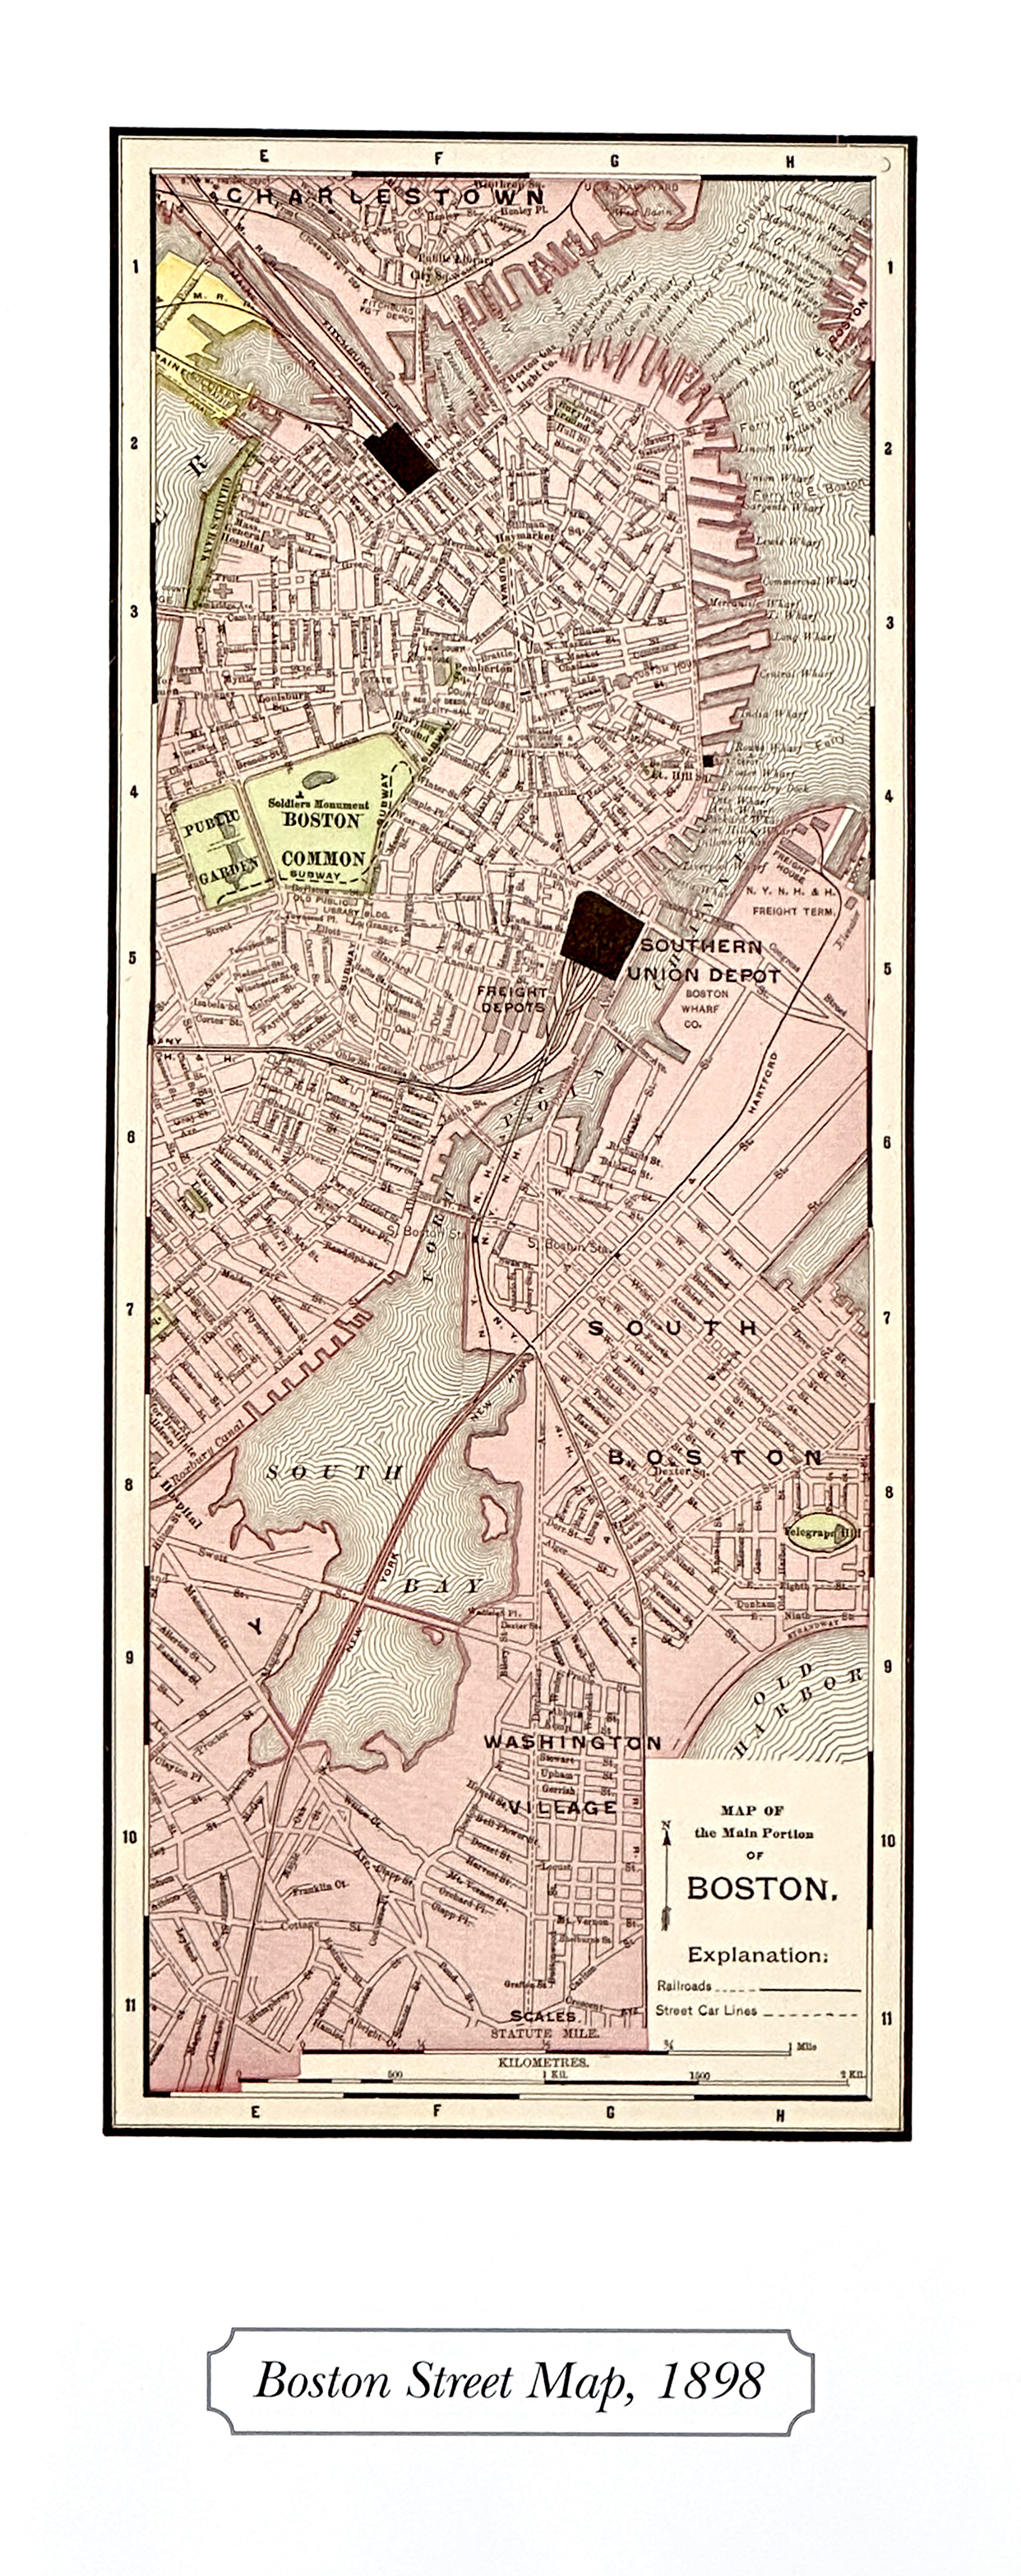 Boston Street Map, 1898